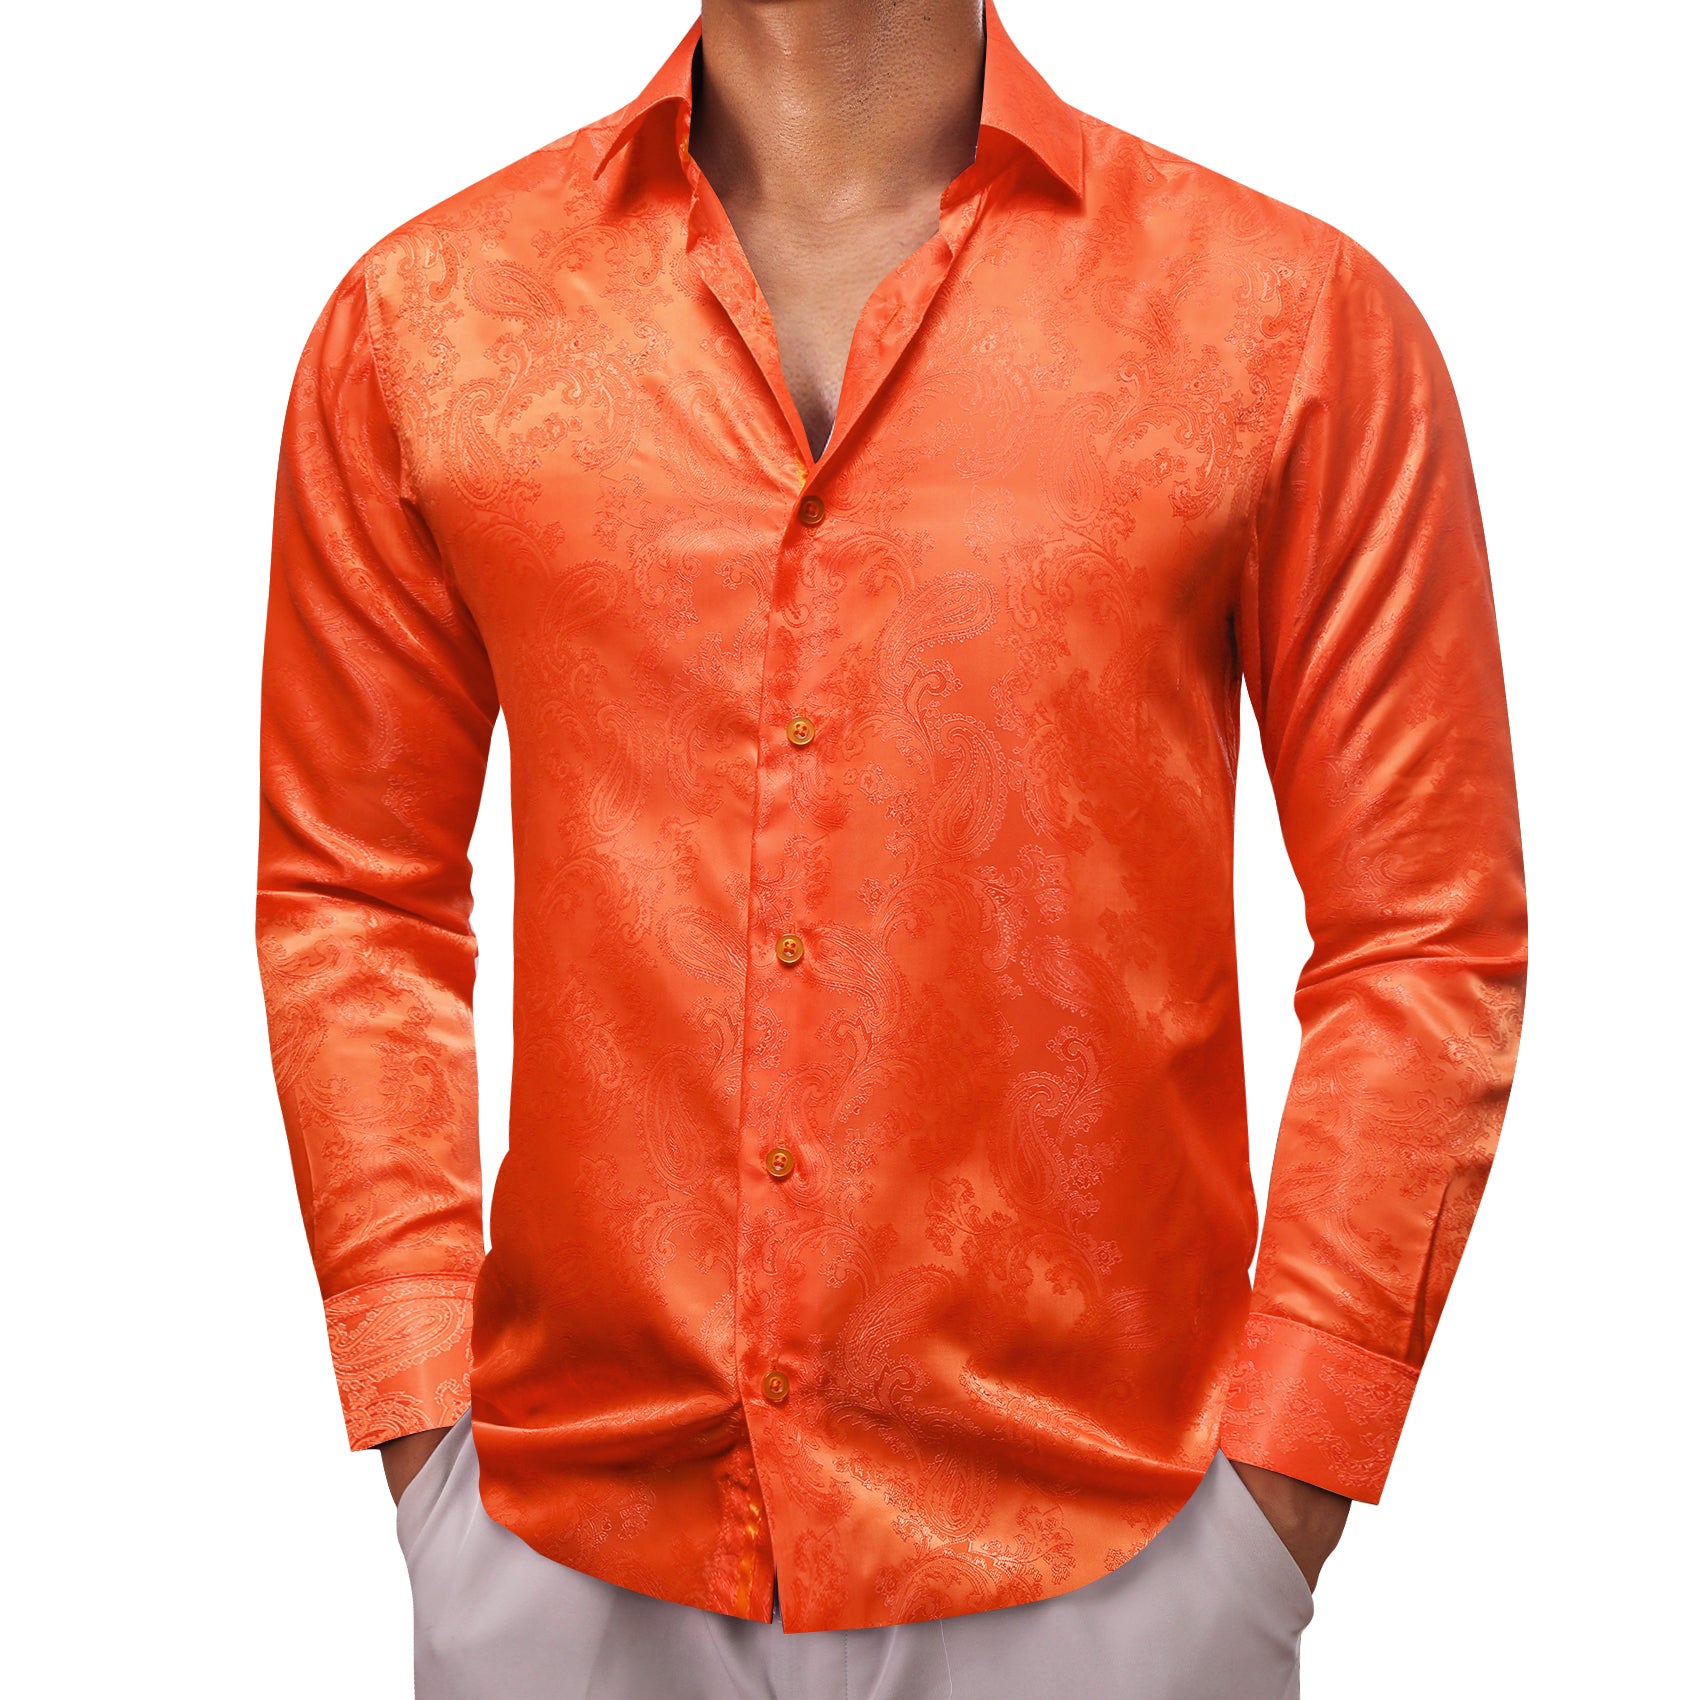 Orange long sleeve white button down shirt